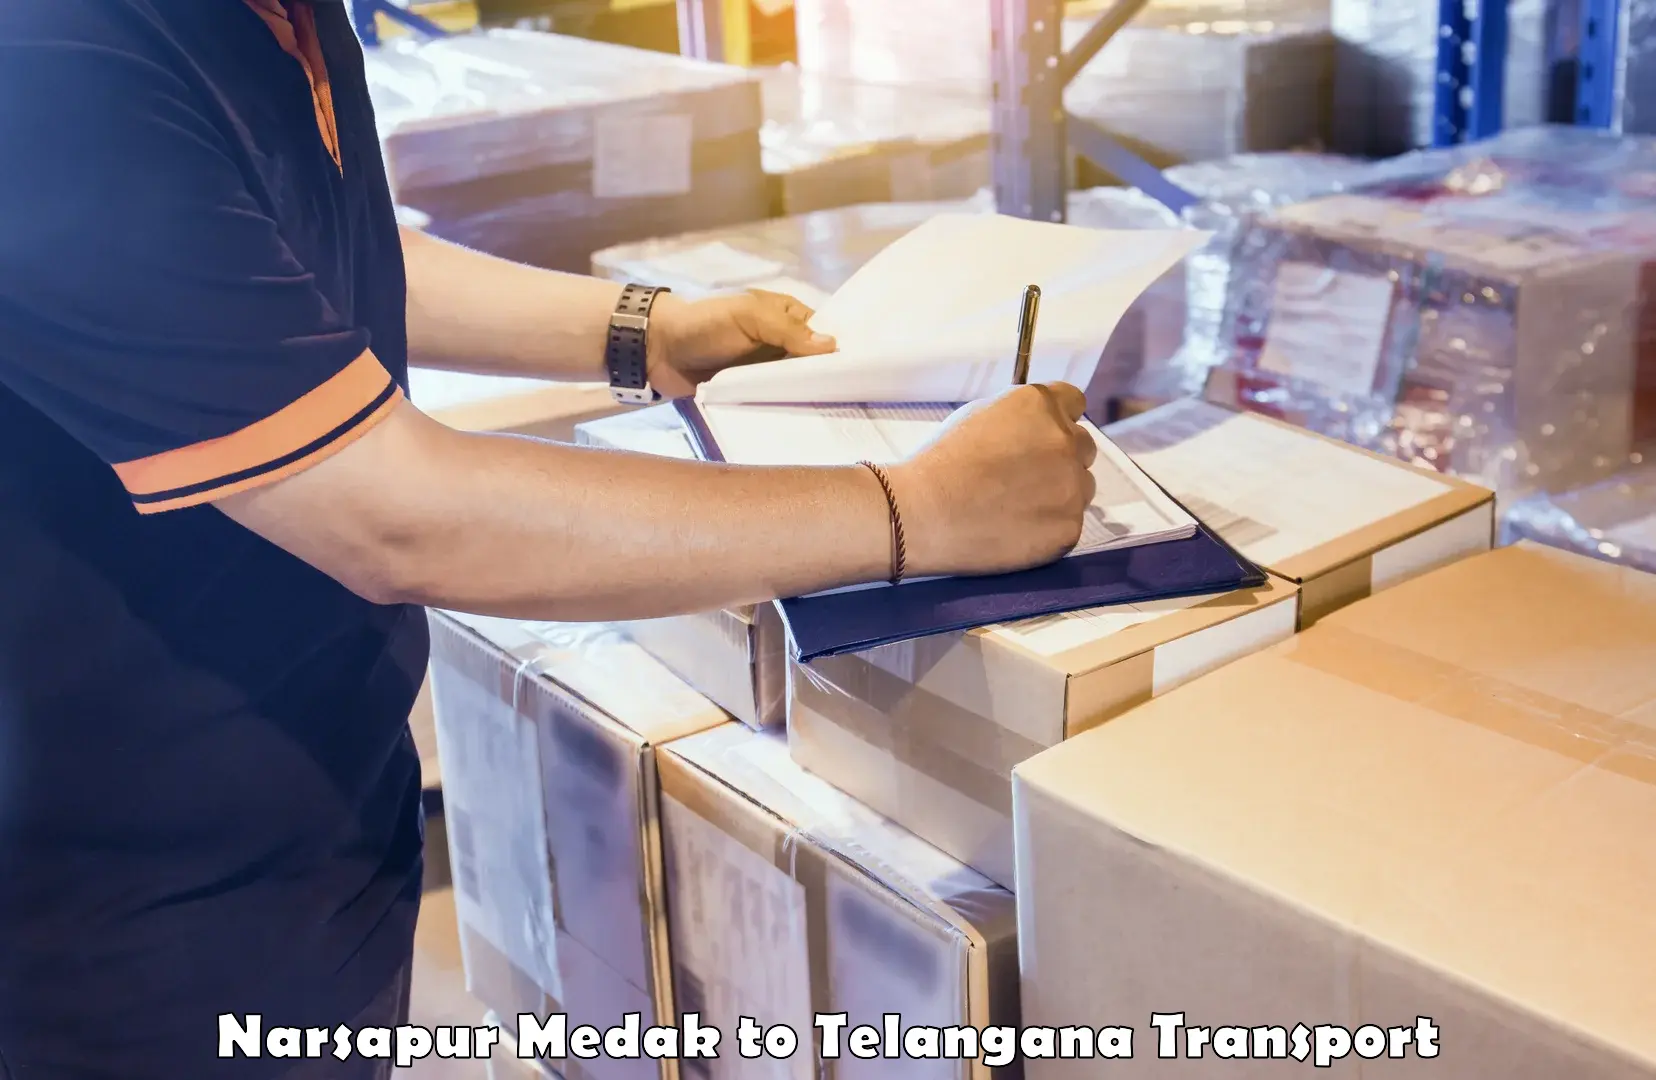 Daily parcel service transport Narsapur Medak to Tiryani